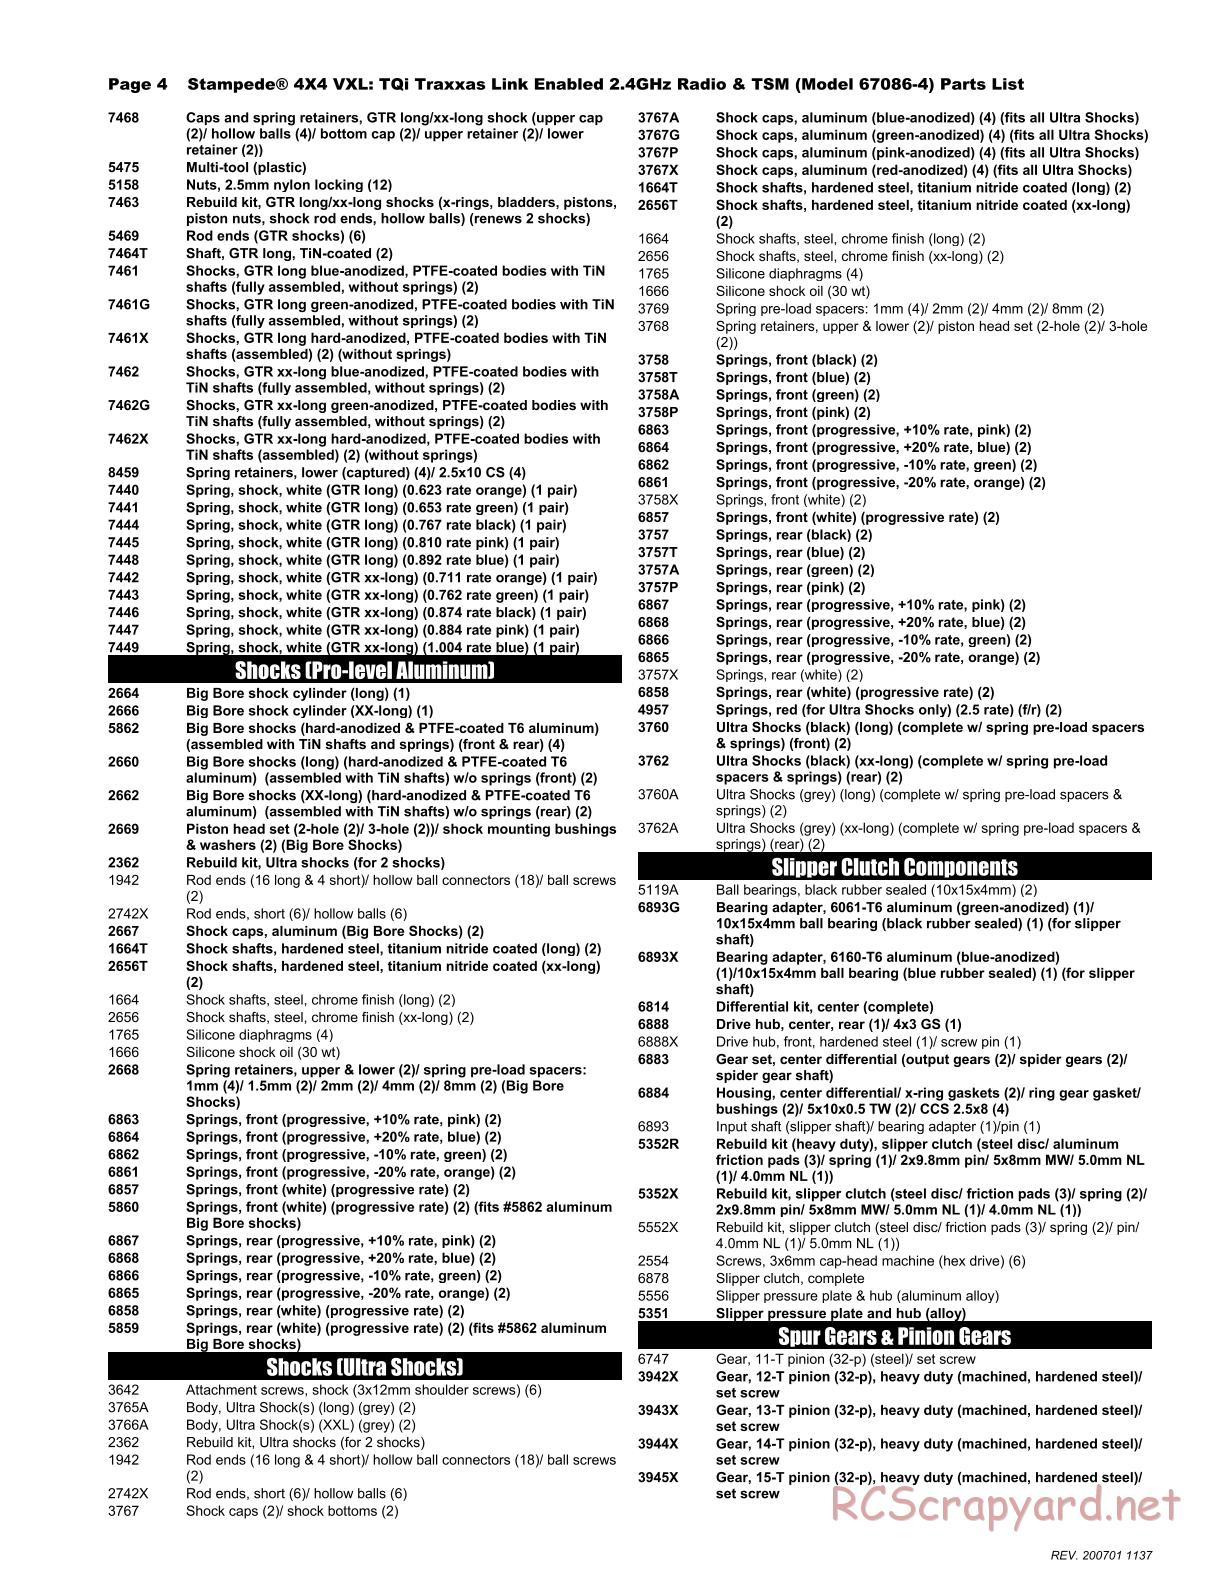 Traxxas - Stampede 4x4 VXL TSM - Parts List - Page 4